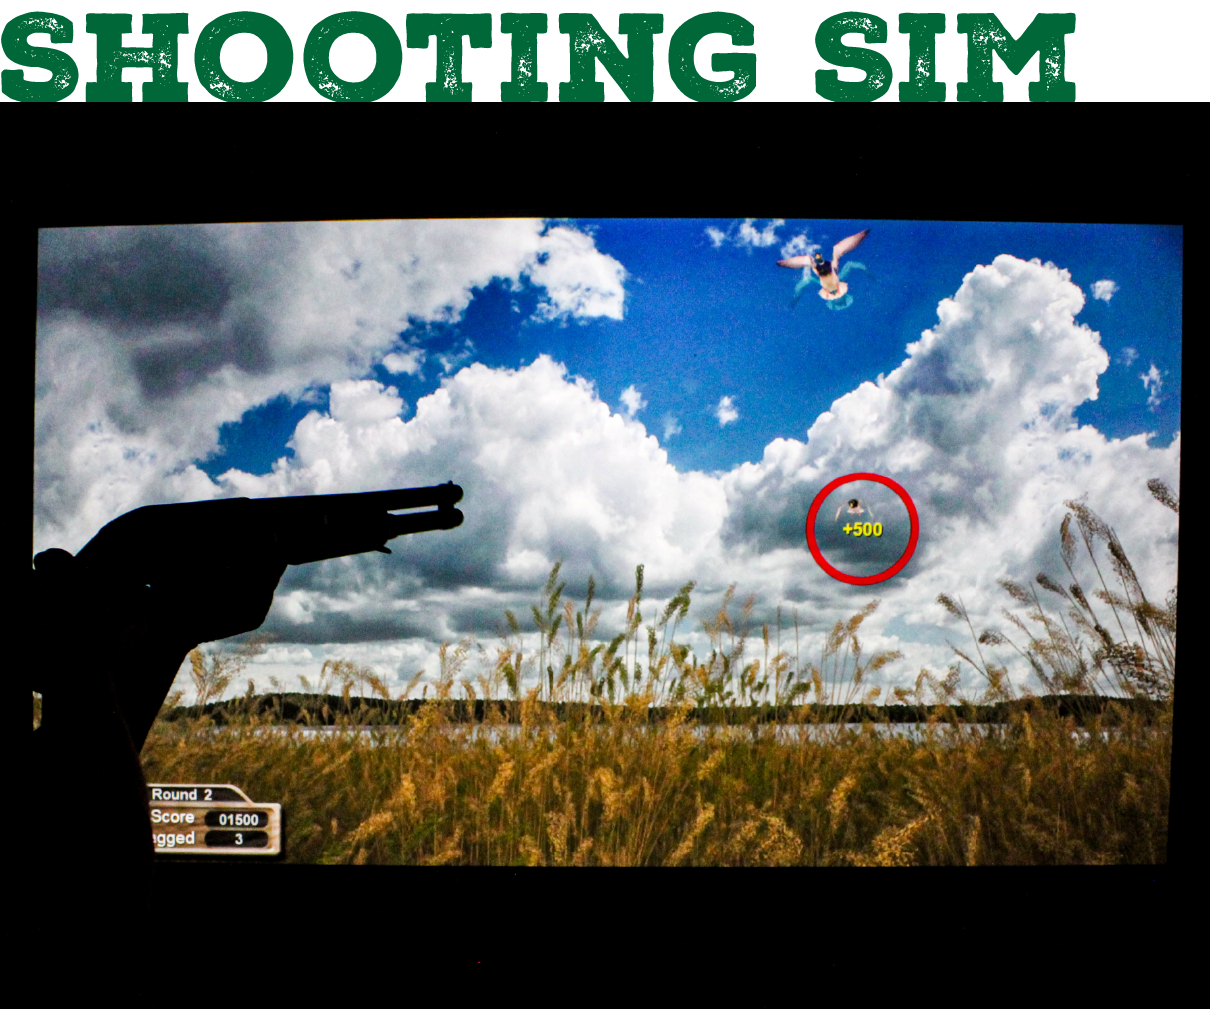 Shooting sim header